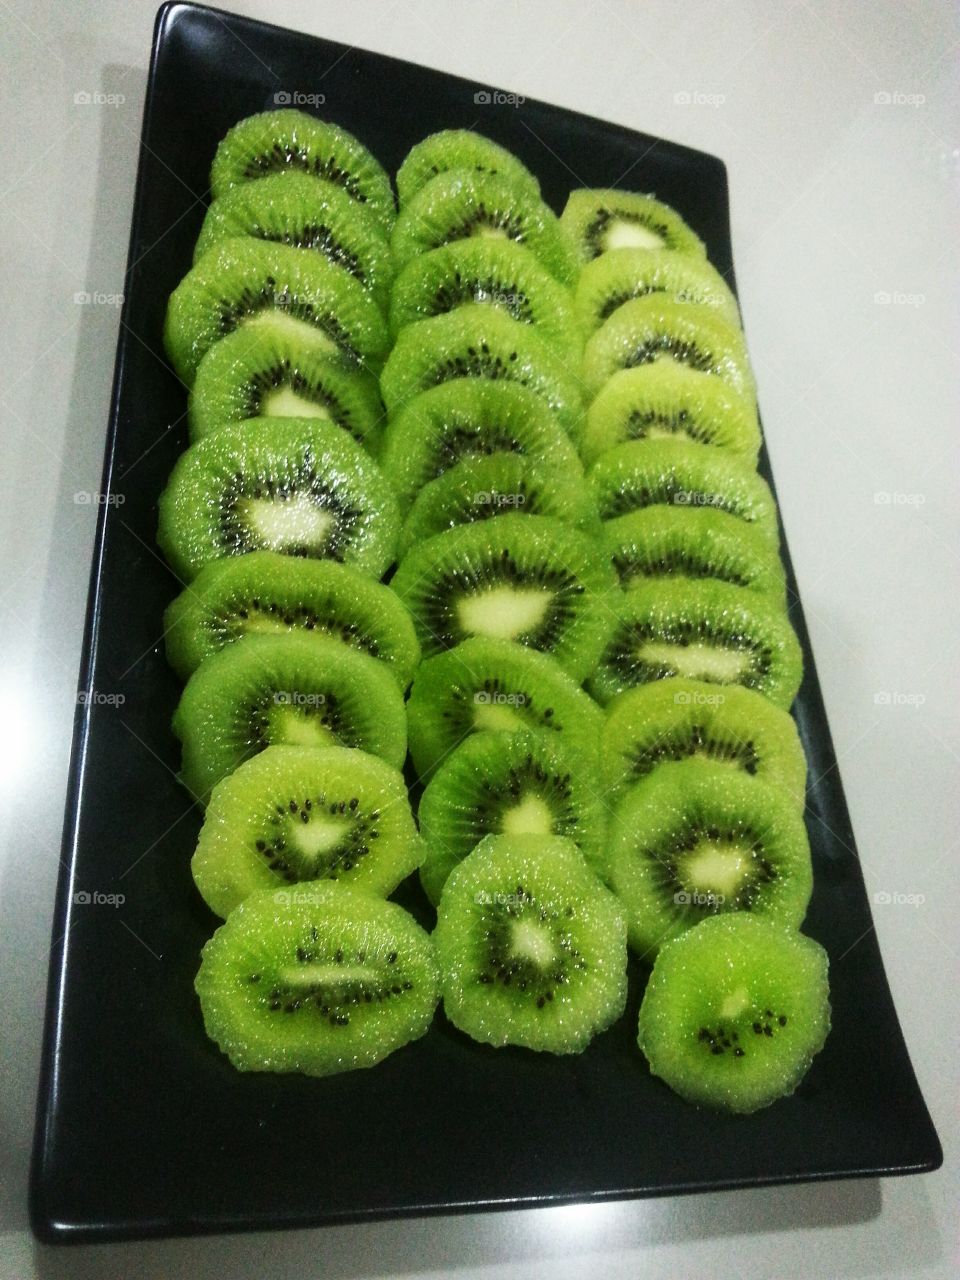 kiwi
green
fruit
health
delicious
good
food